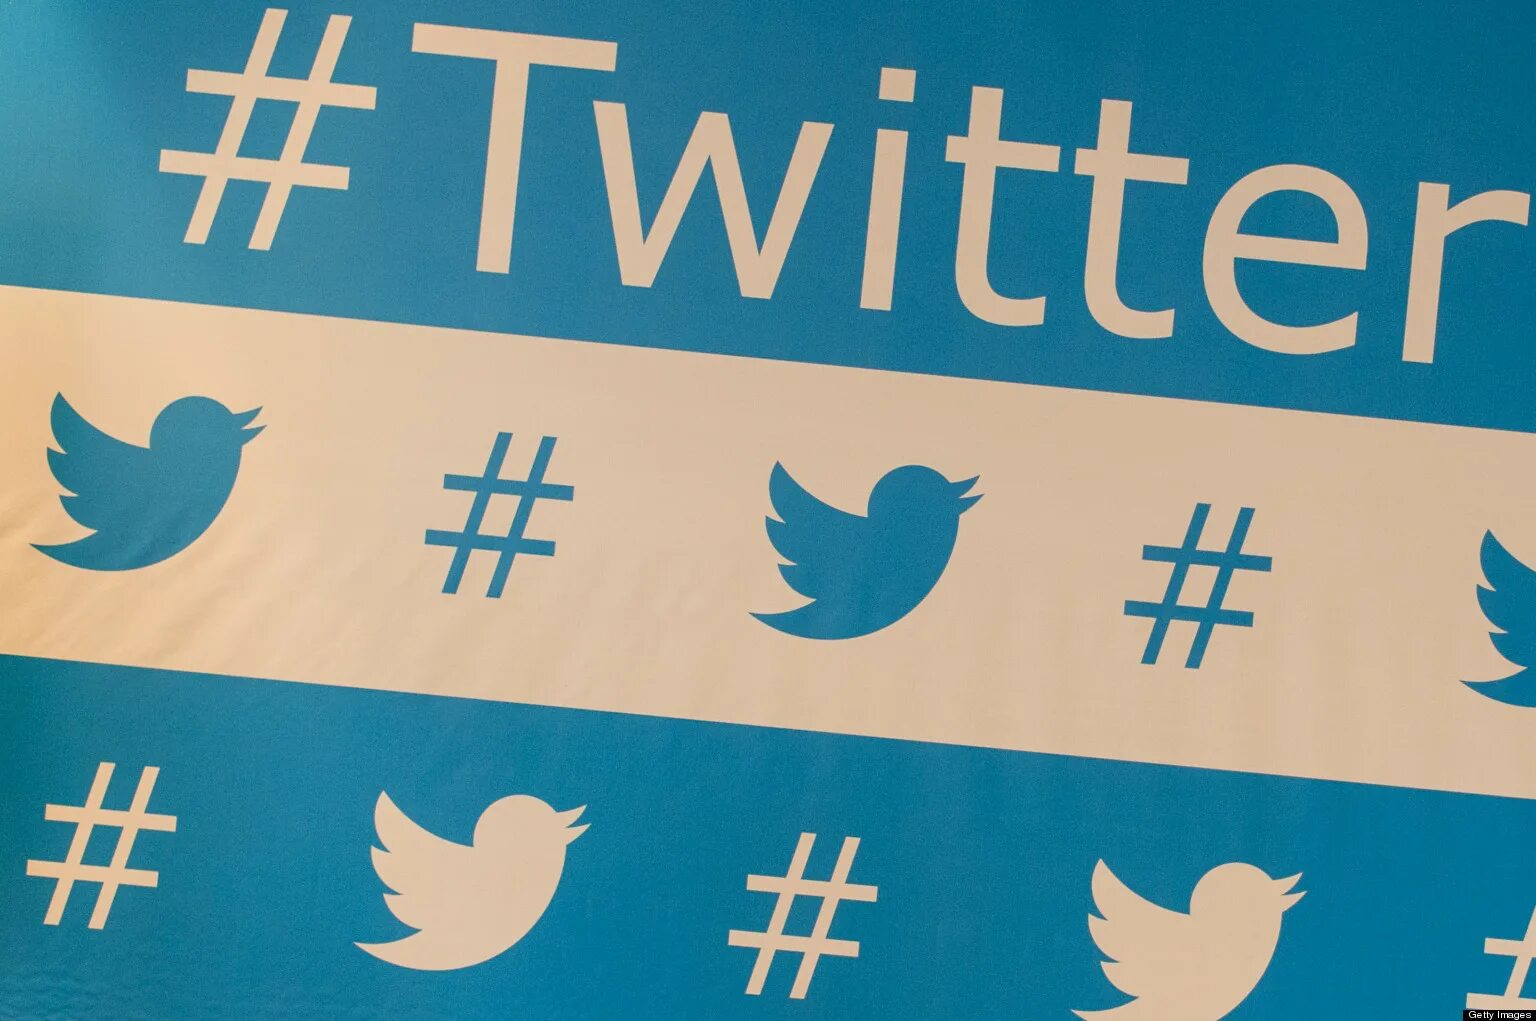 Твиттер. Логотип твиттера. «Twitter» — социальная сеть. Twitter картинки. Twitter r10